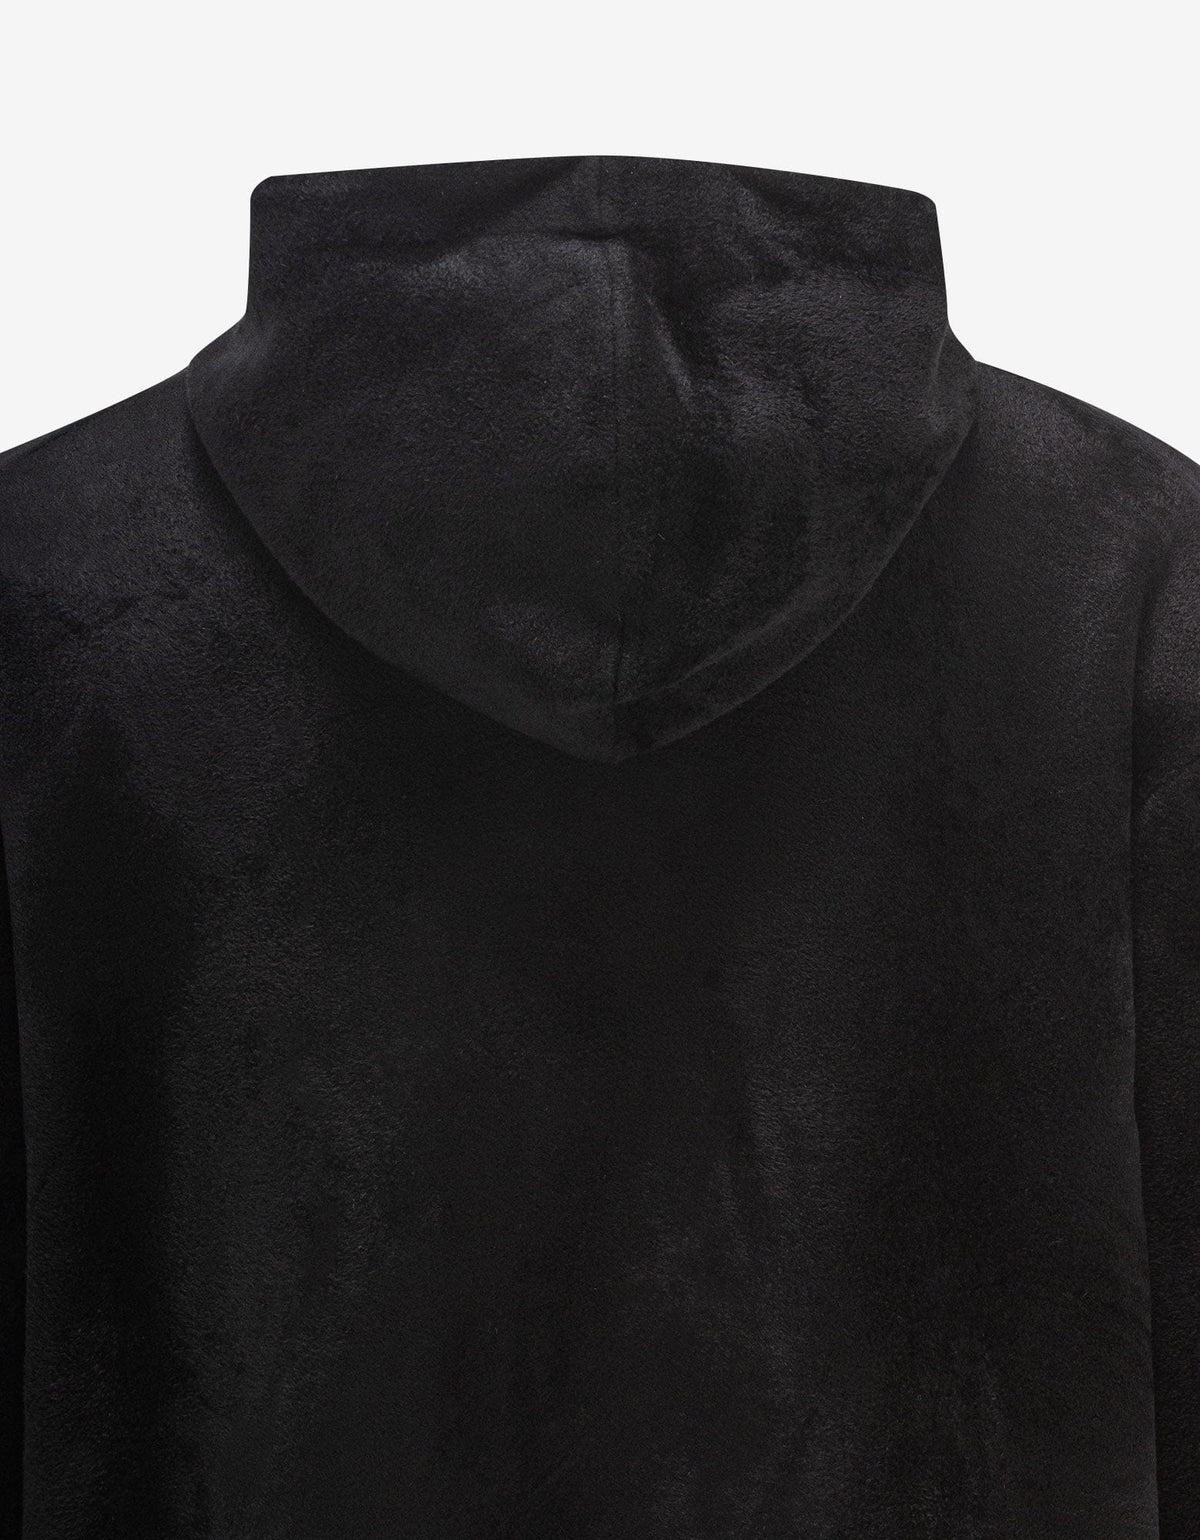 Givenchy Black Velvet Zip Logo Hoodie